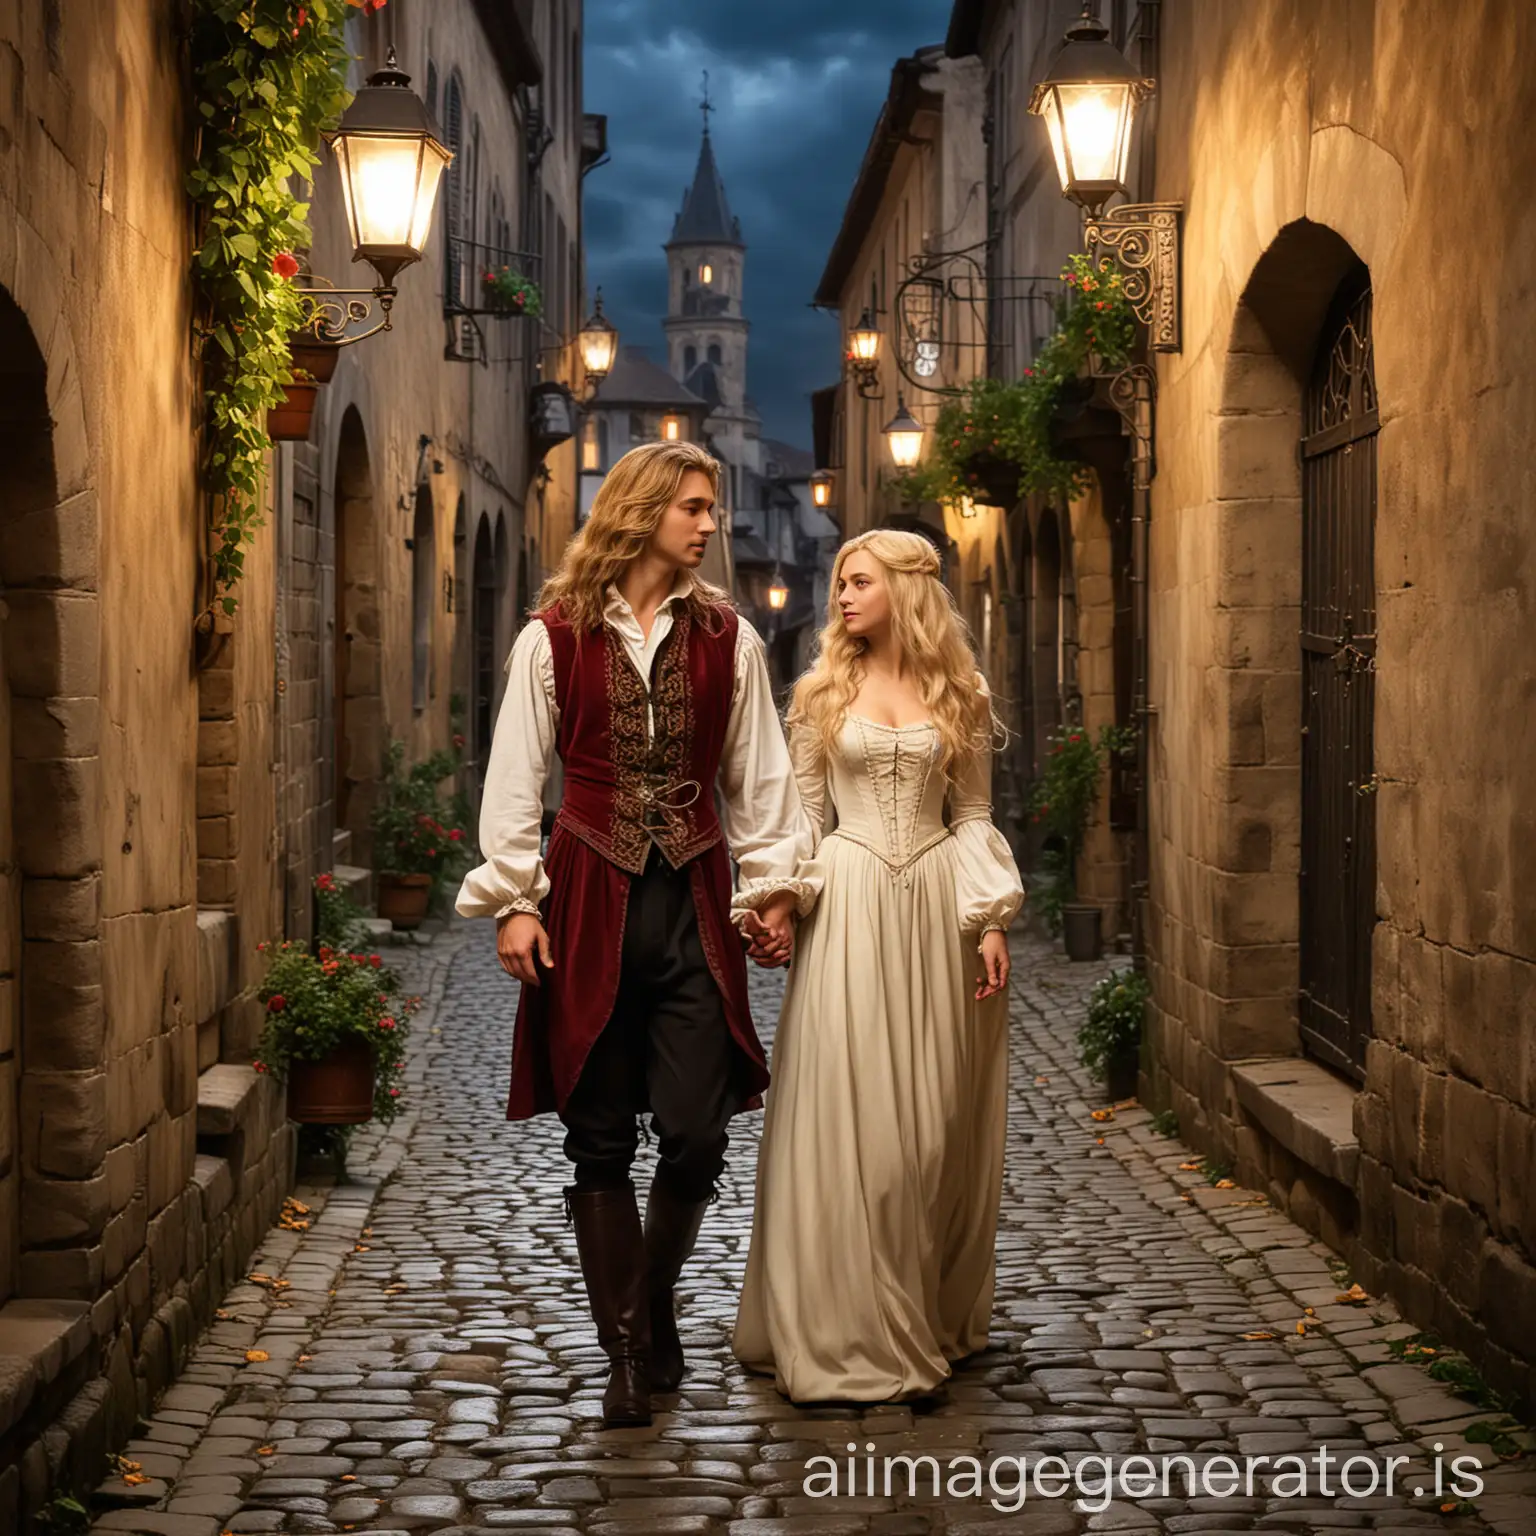 Romantic couple, Renaissance, village alley, lantern, cobblestone street, long haired prince, blonde young lady